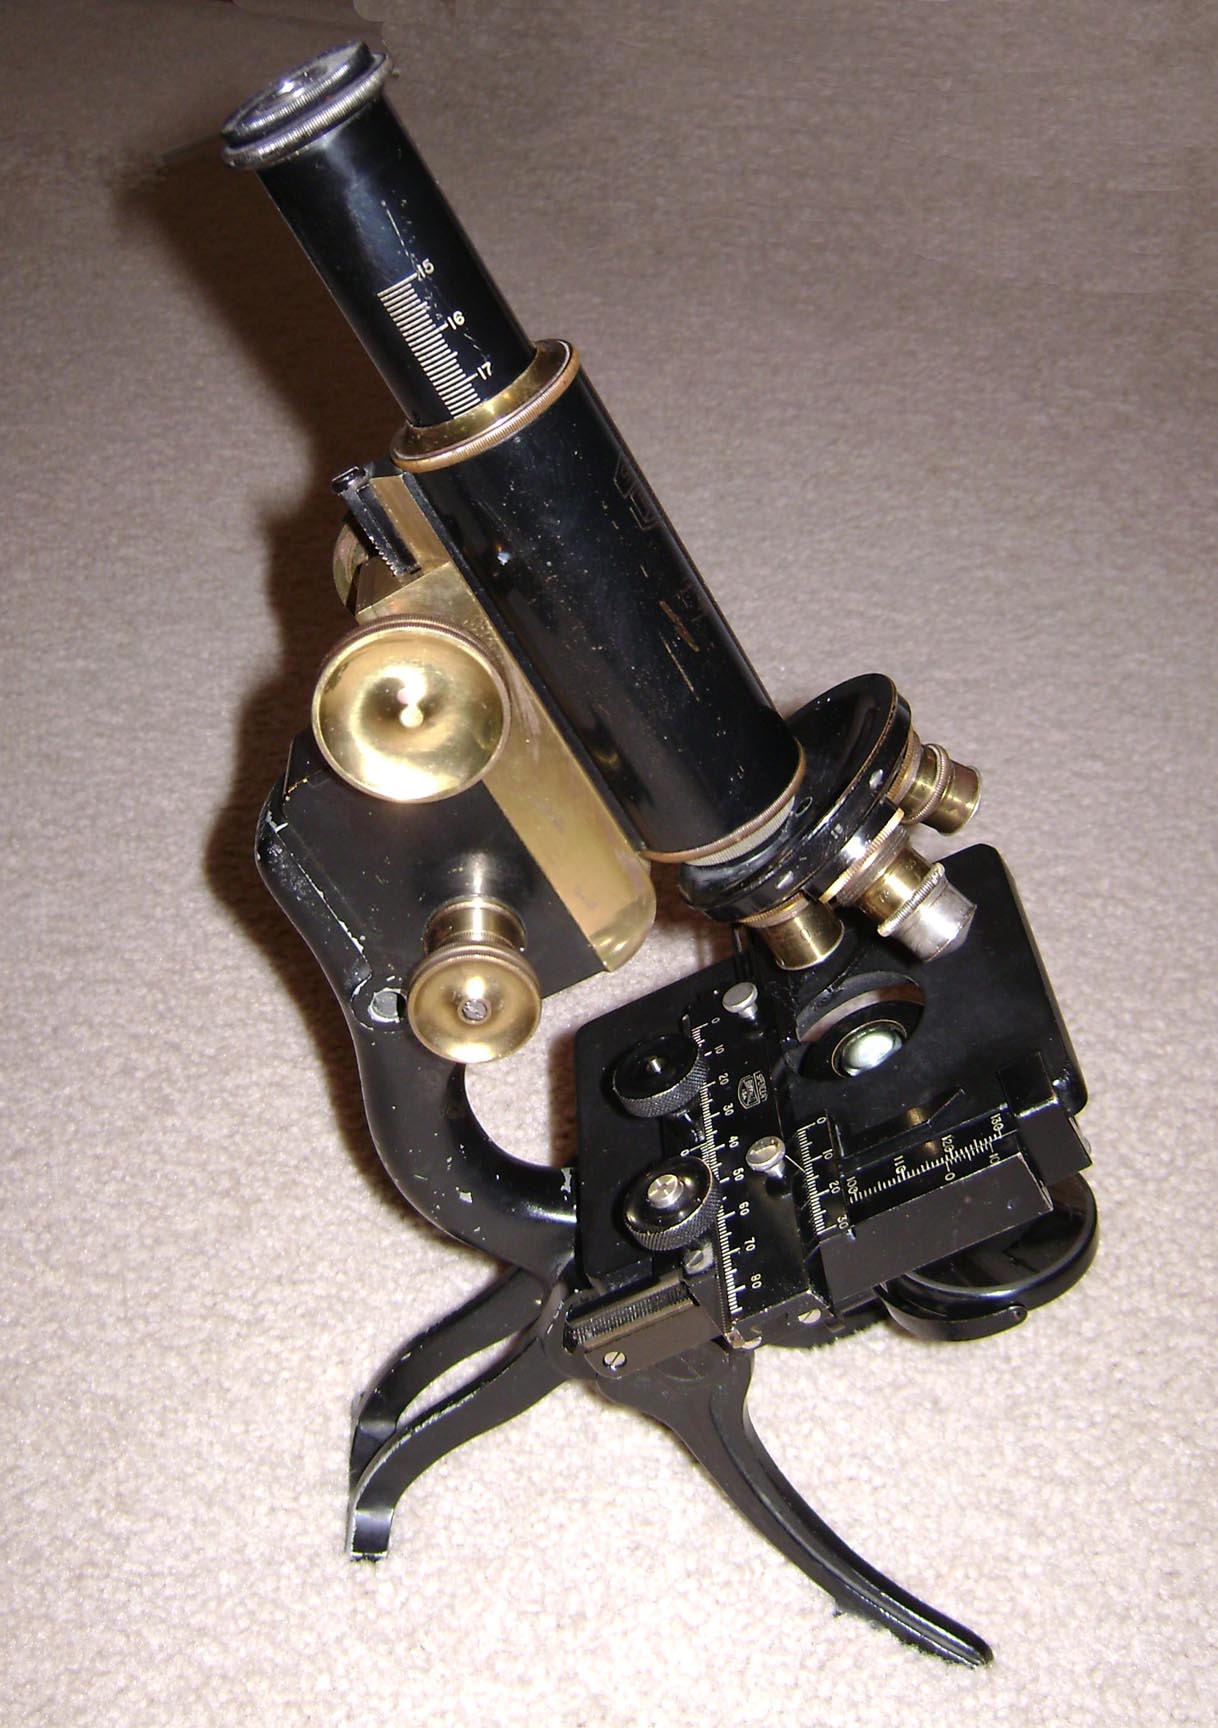 60H microscope